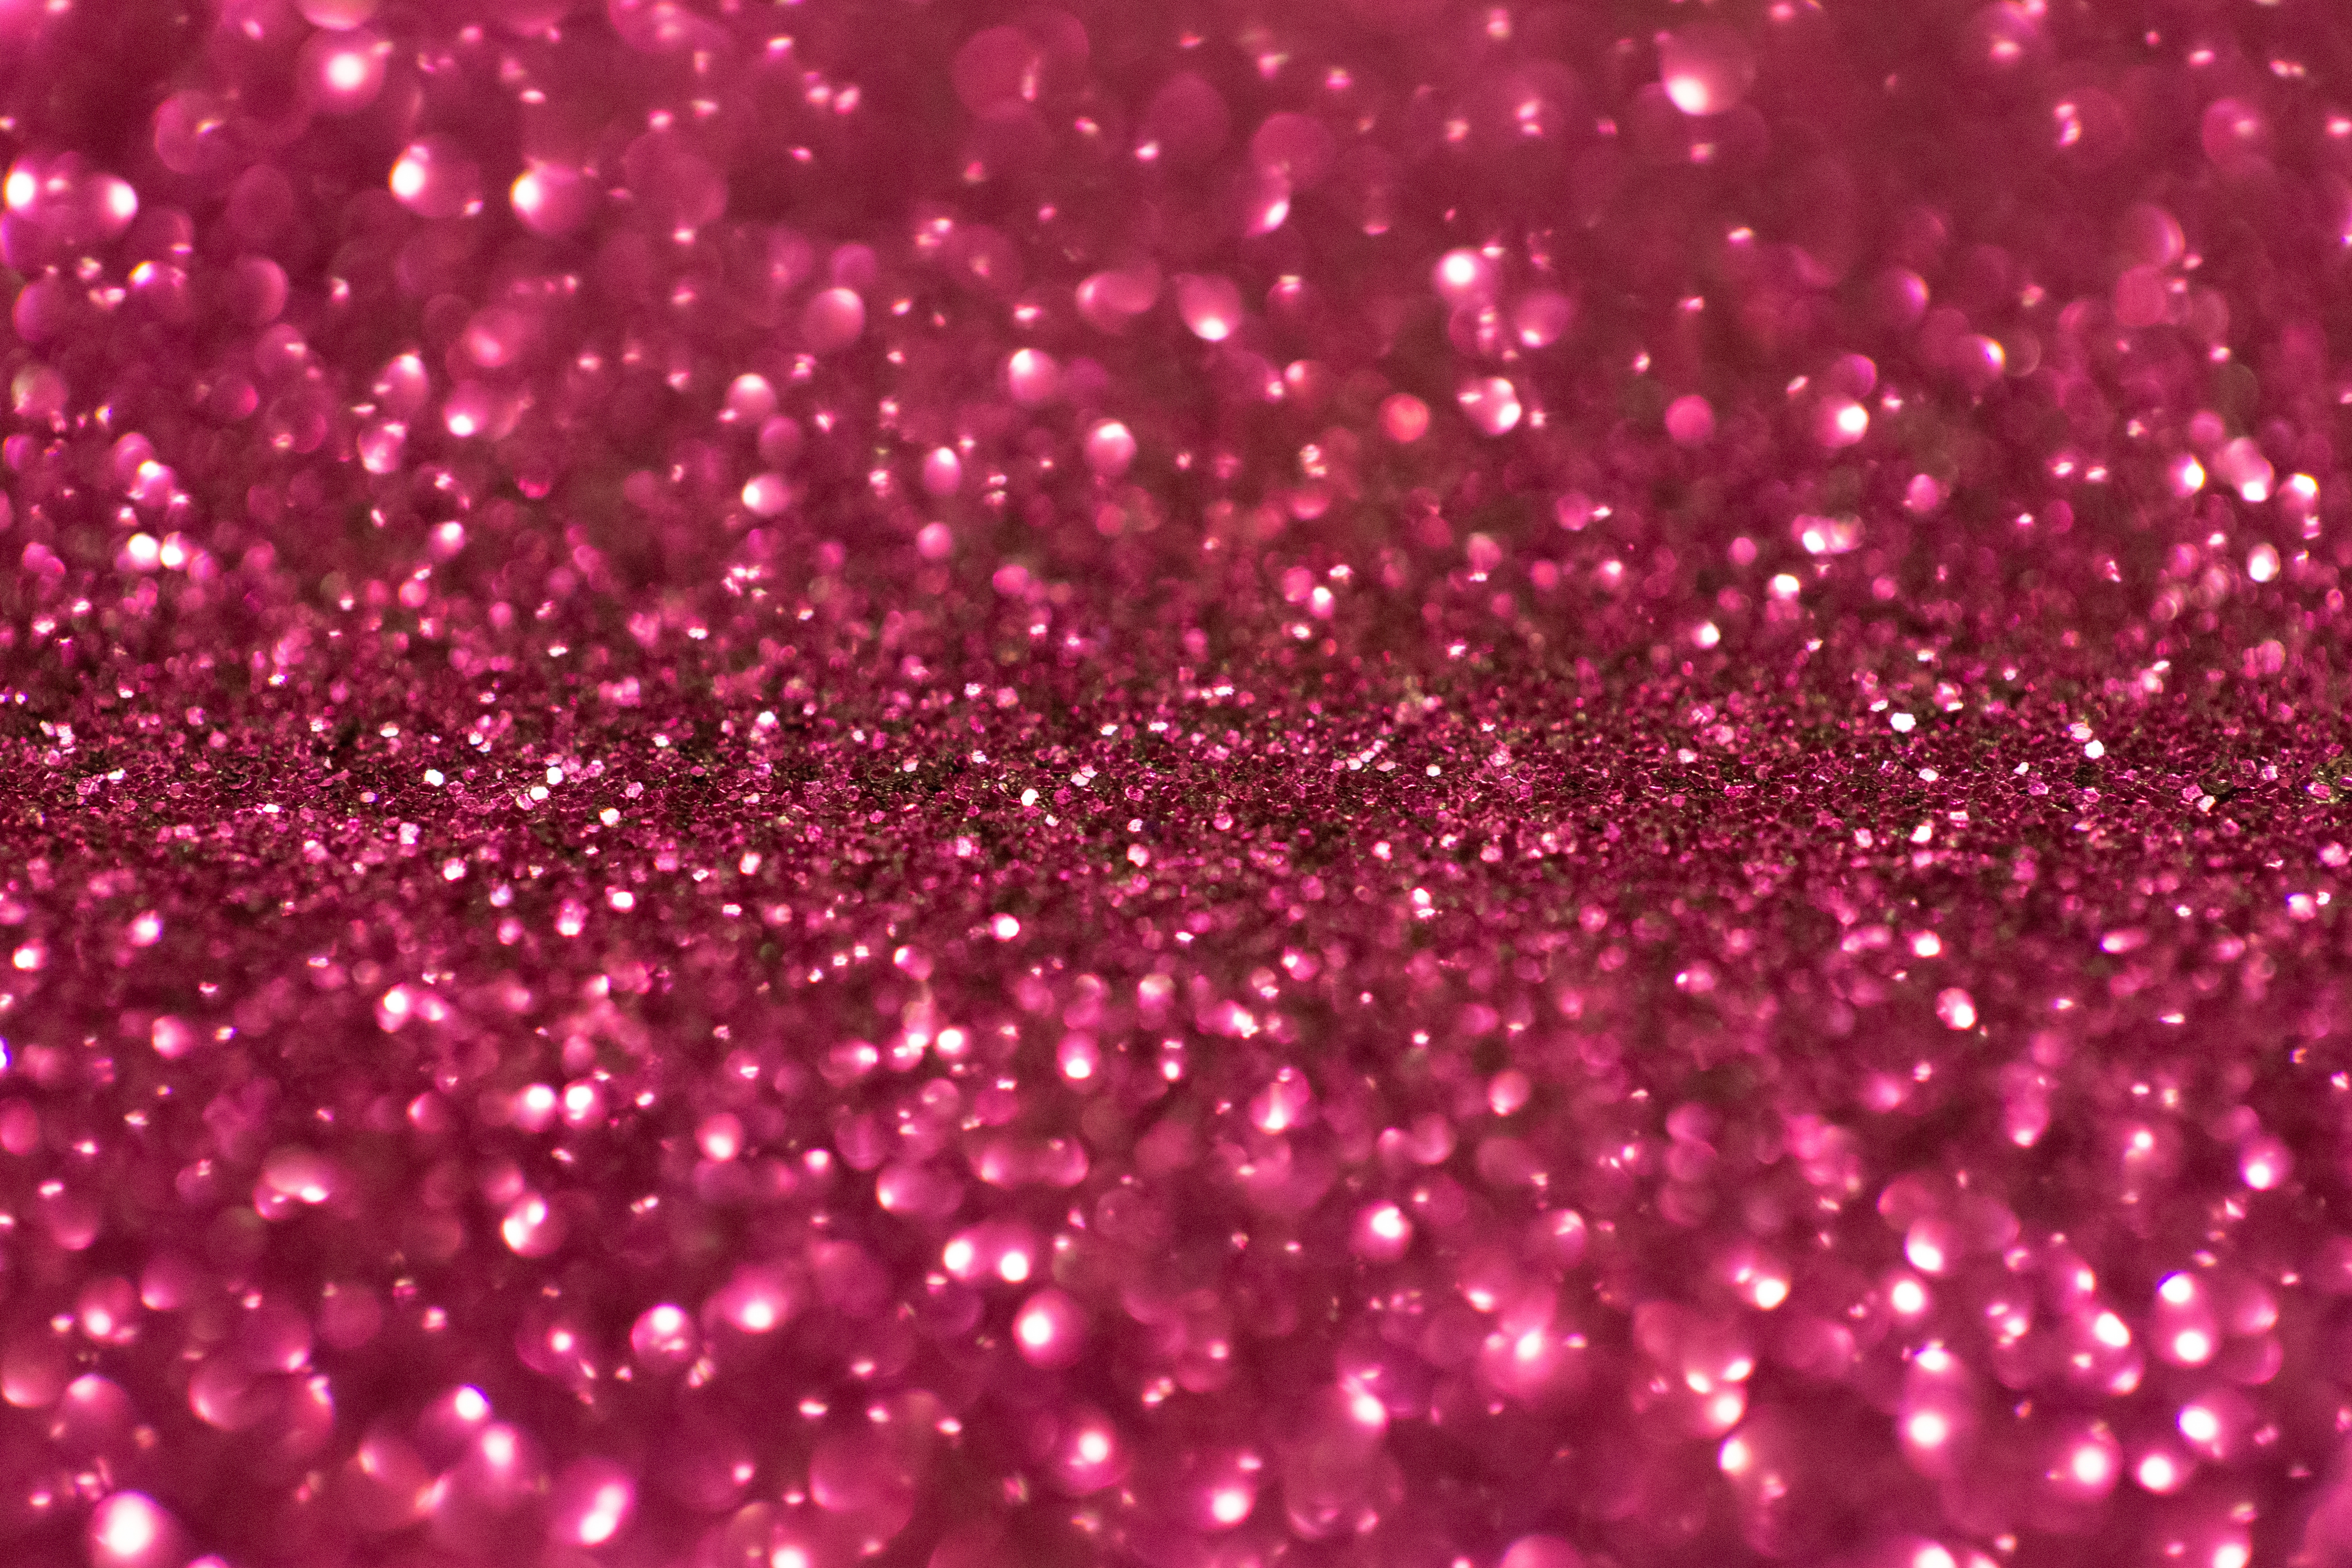 HD wallpaper, Pink Glitter, Sparkles, Blurred, Selective Focus, 5K, Shimmering, Macro, Pink Background, Shiny